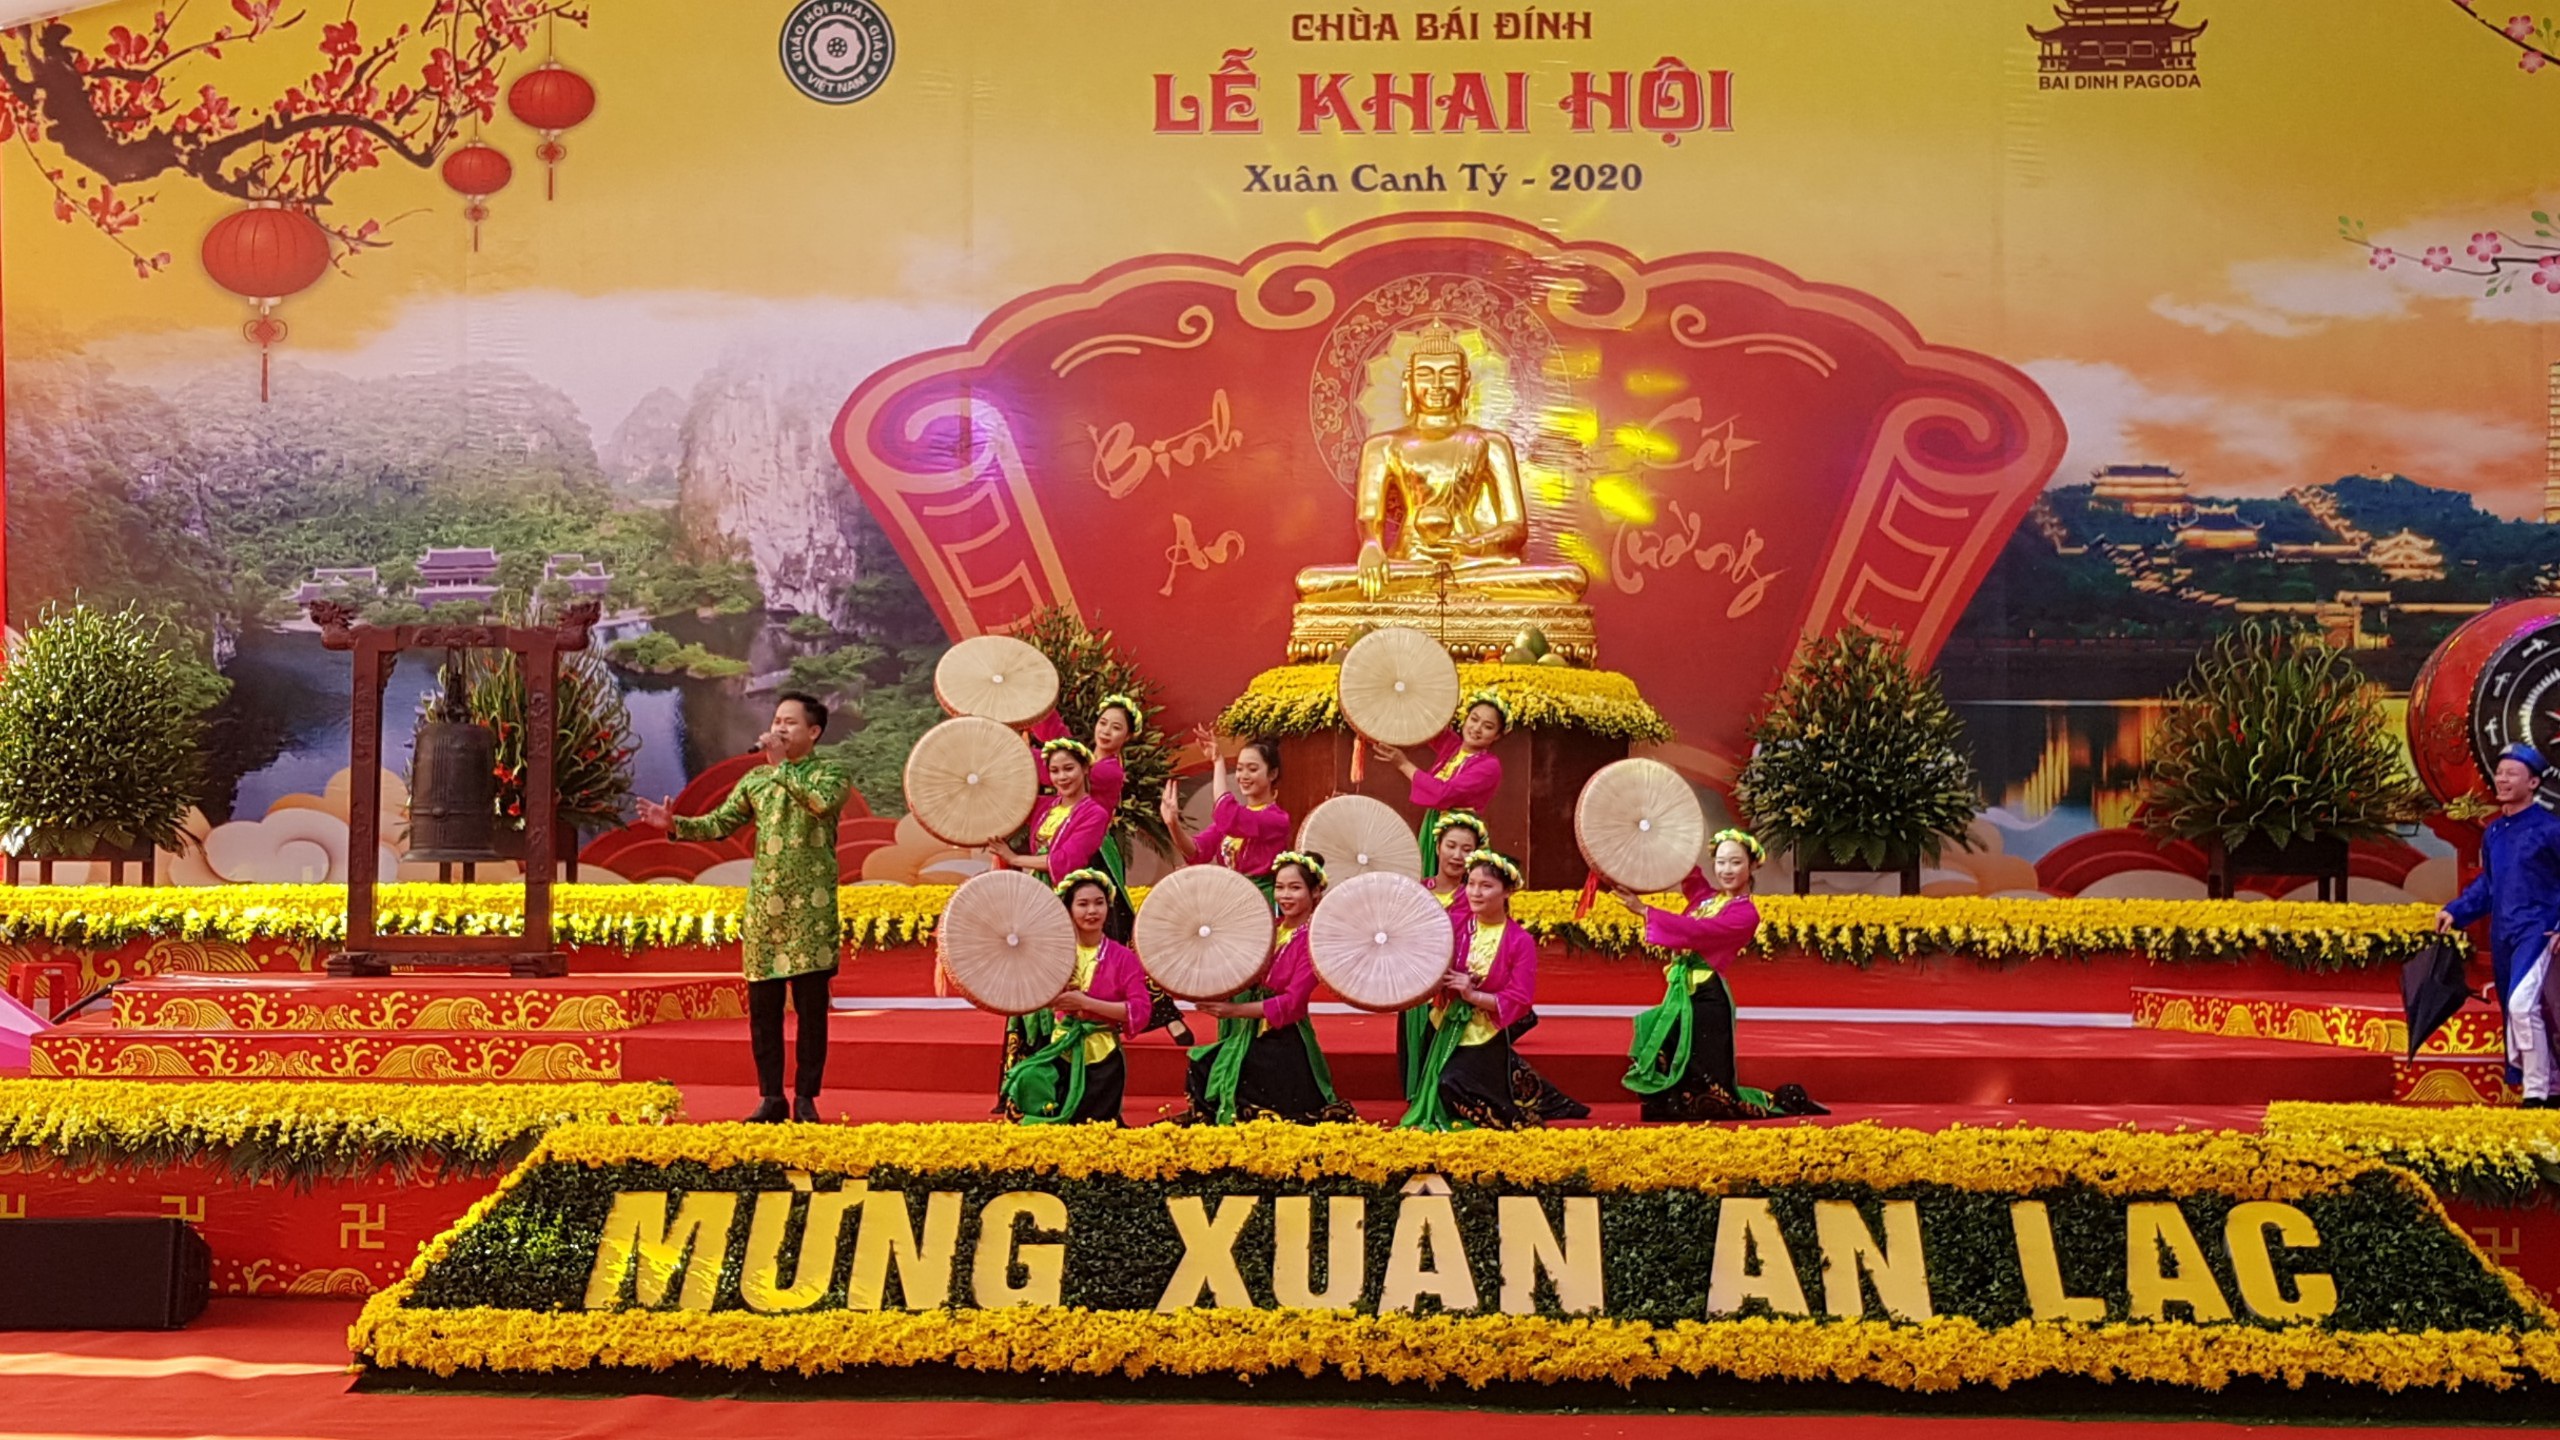 Opening of Bai Dinh pagoda festival